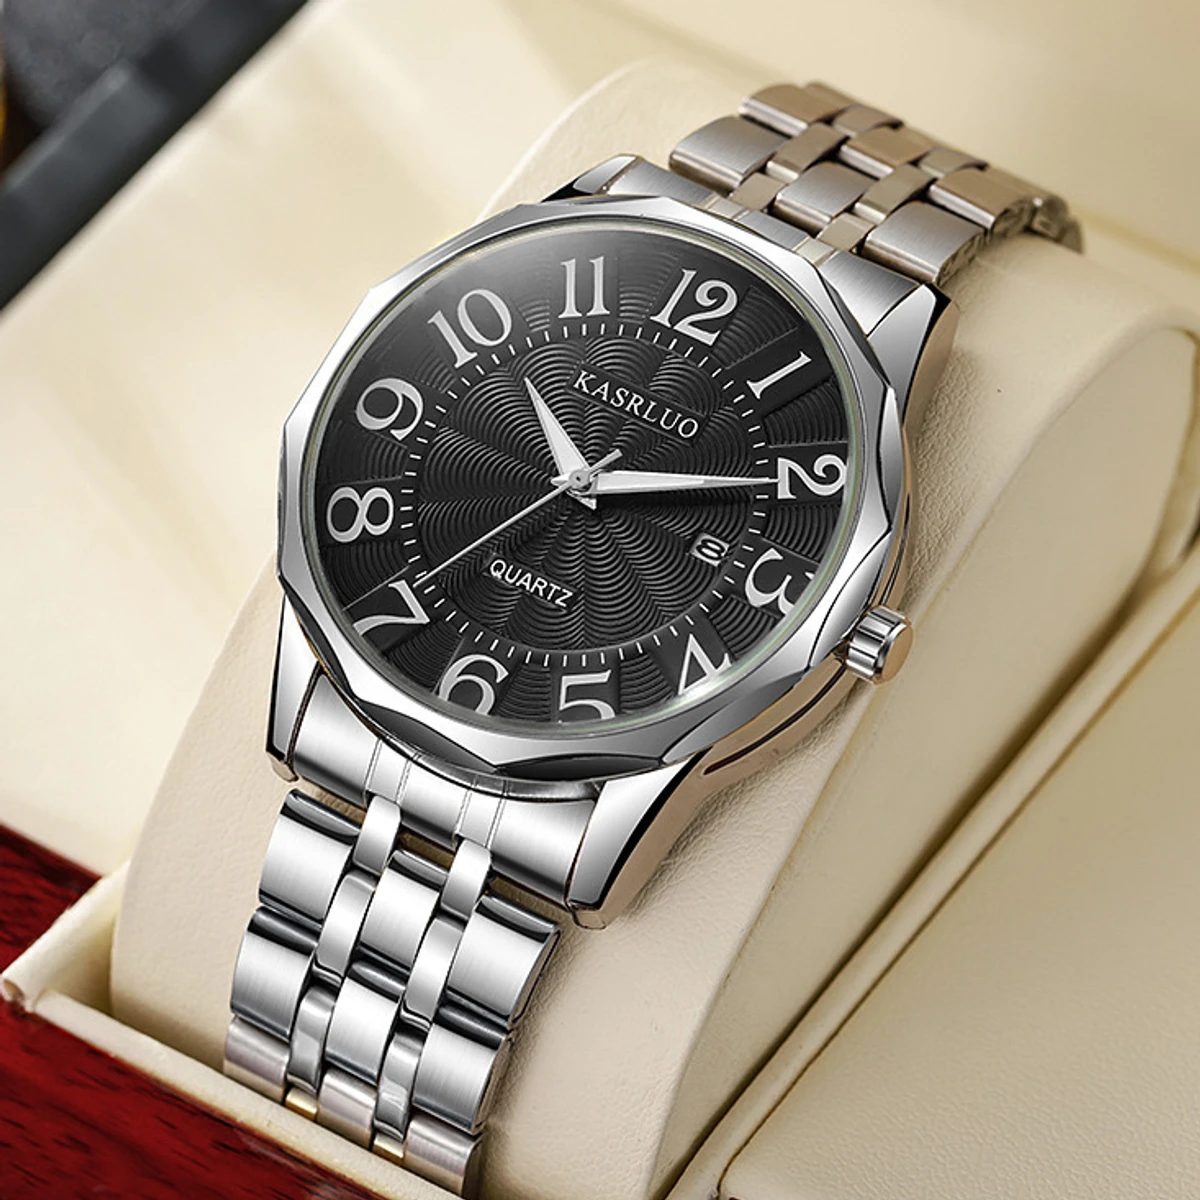 KASRLUO Popular New Fashion Quartz Watch for Men Stainless Steel Waterproof Luminous Date Mens Watches Top Brand Luxury Clock- Silver & Black